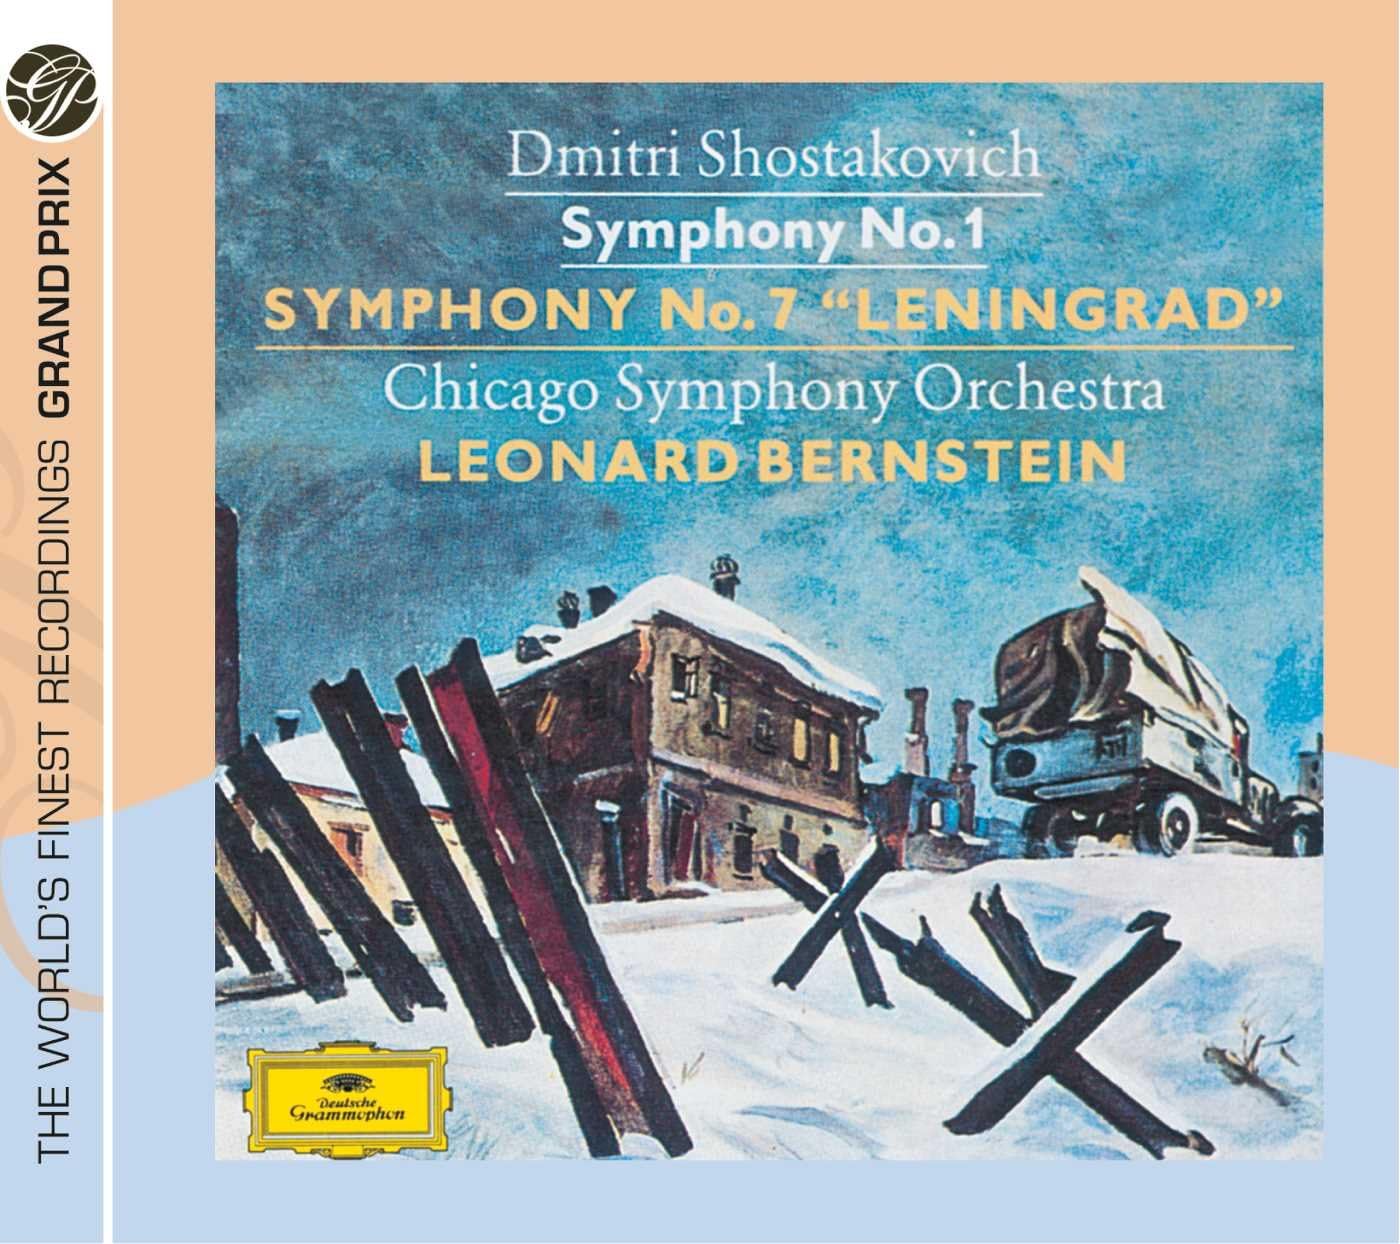 Dmitri Shostakovich: Symphony No. 1, Symphony No. 7 